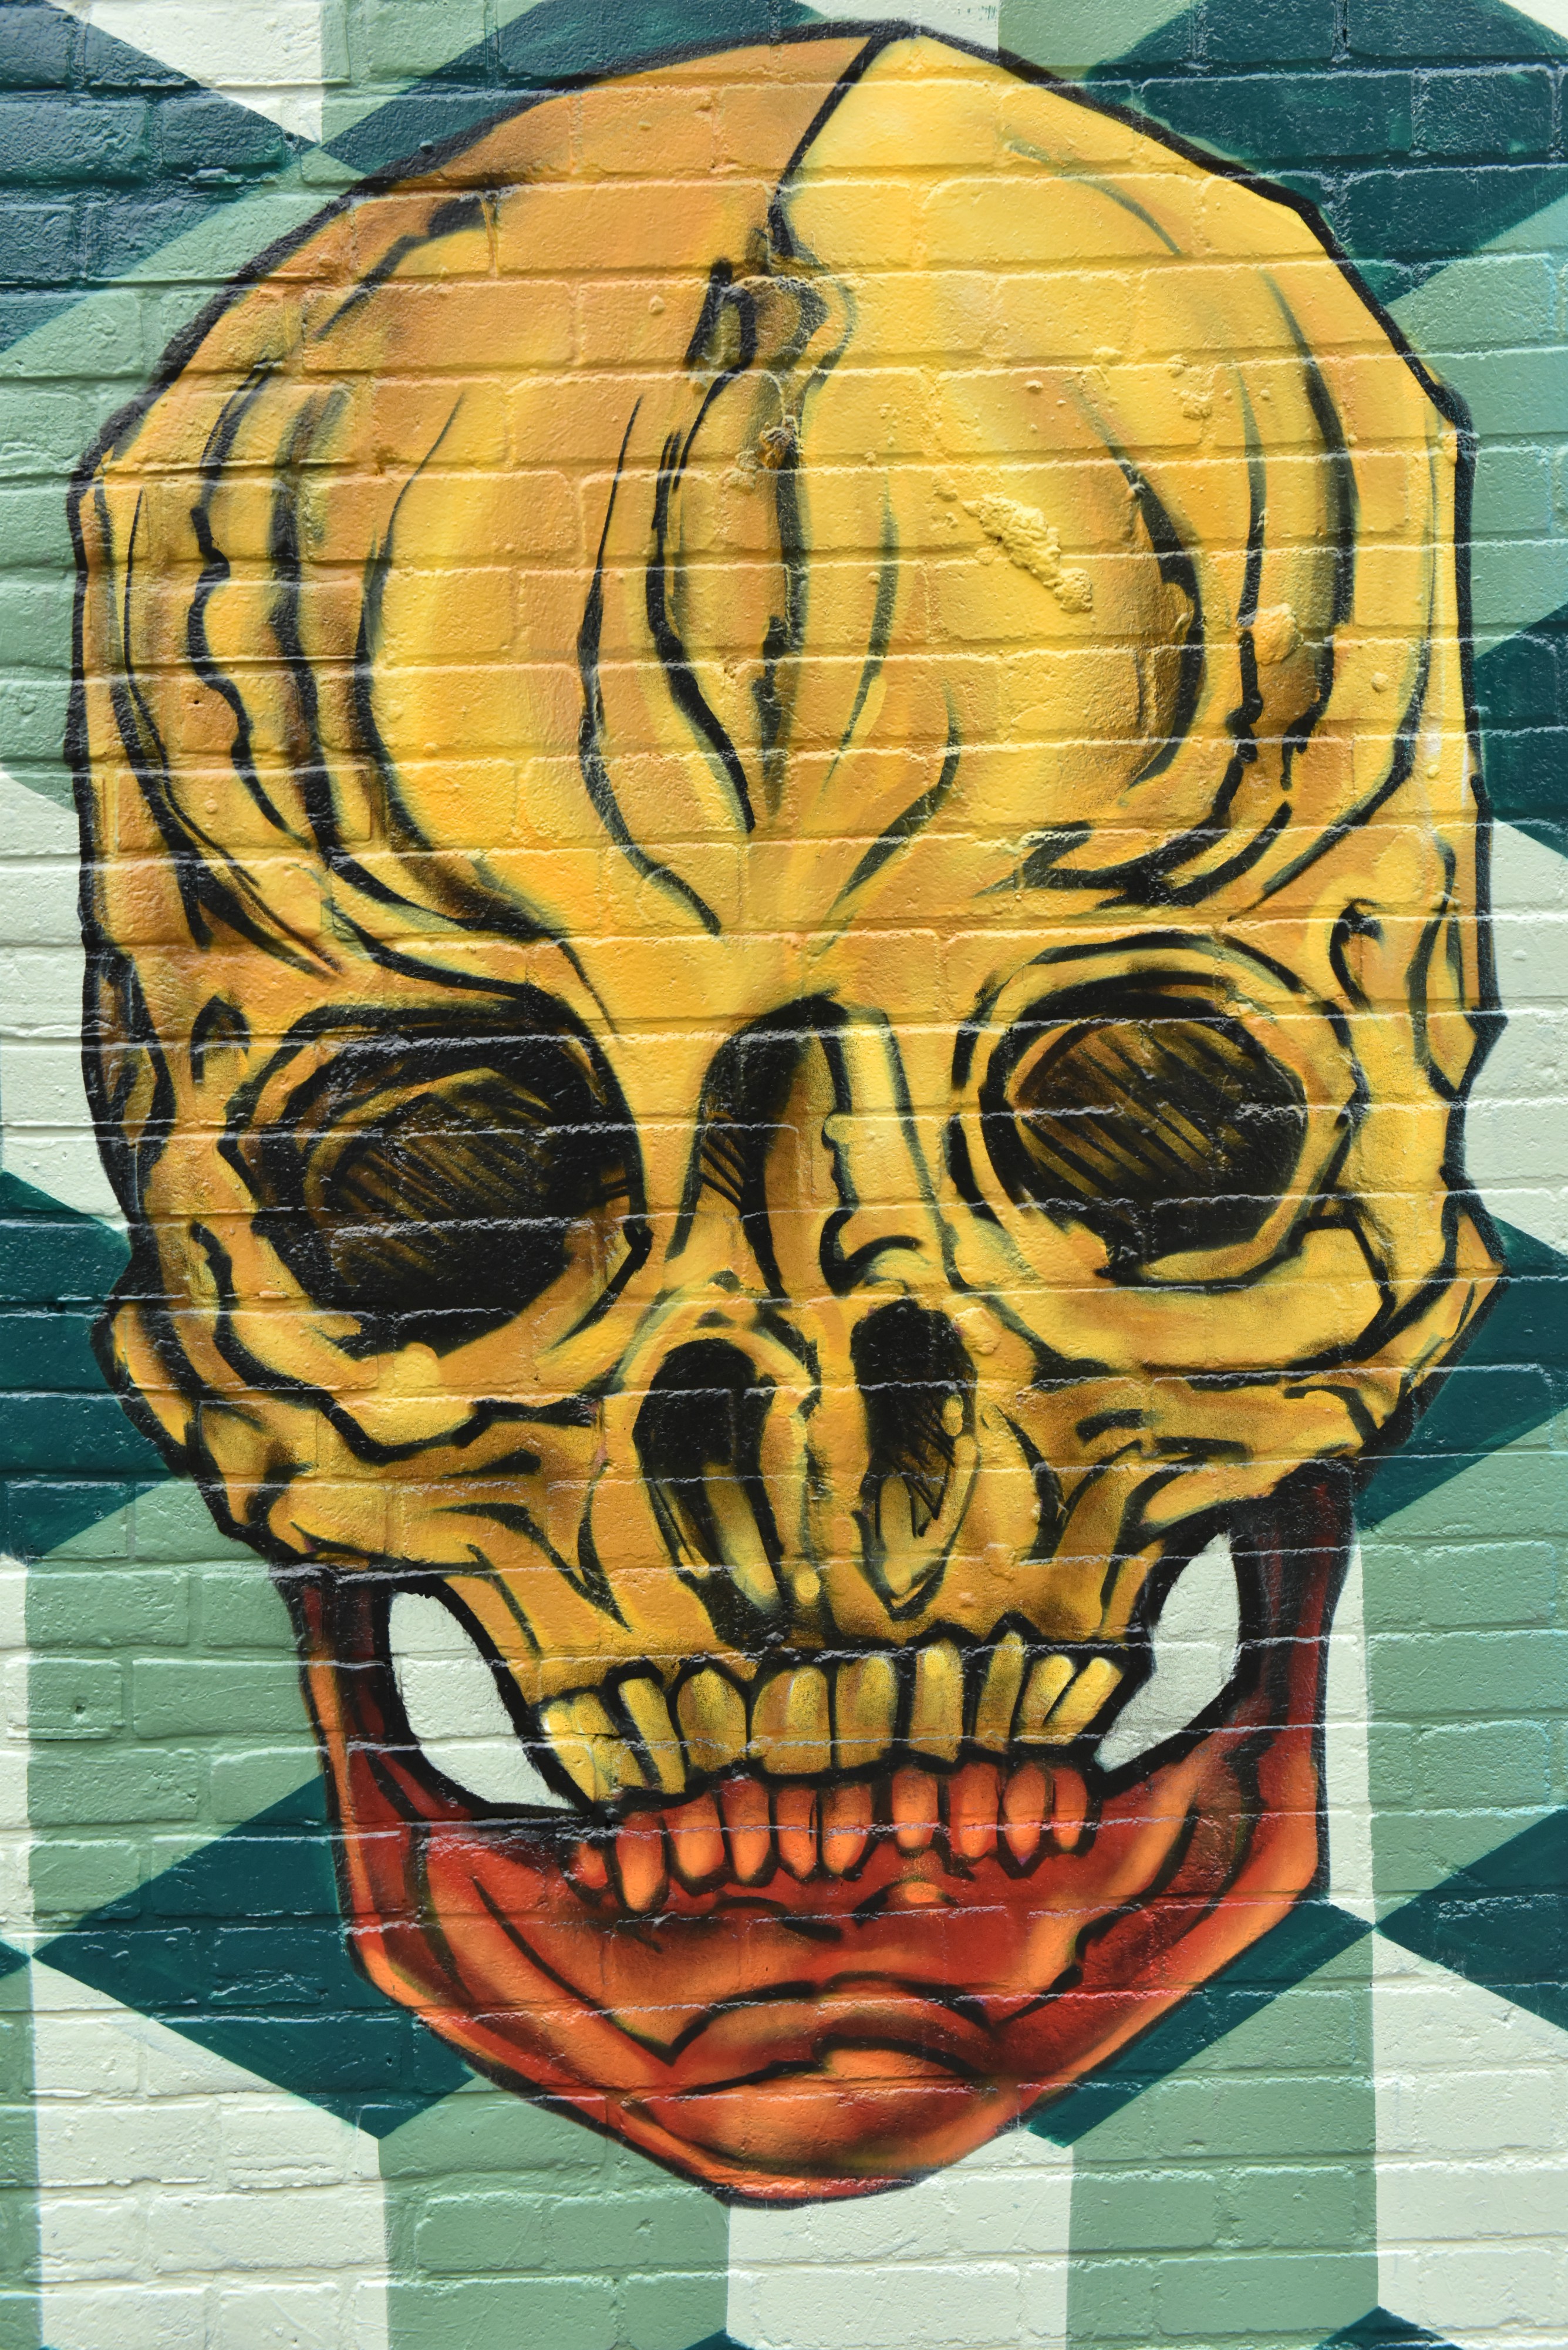 <img src="puppy.jpg" alt="ana yellow skull hanbury street art "> 